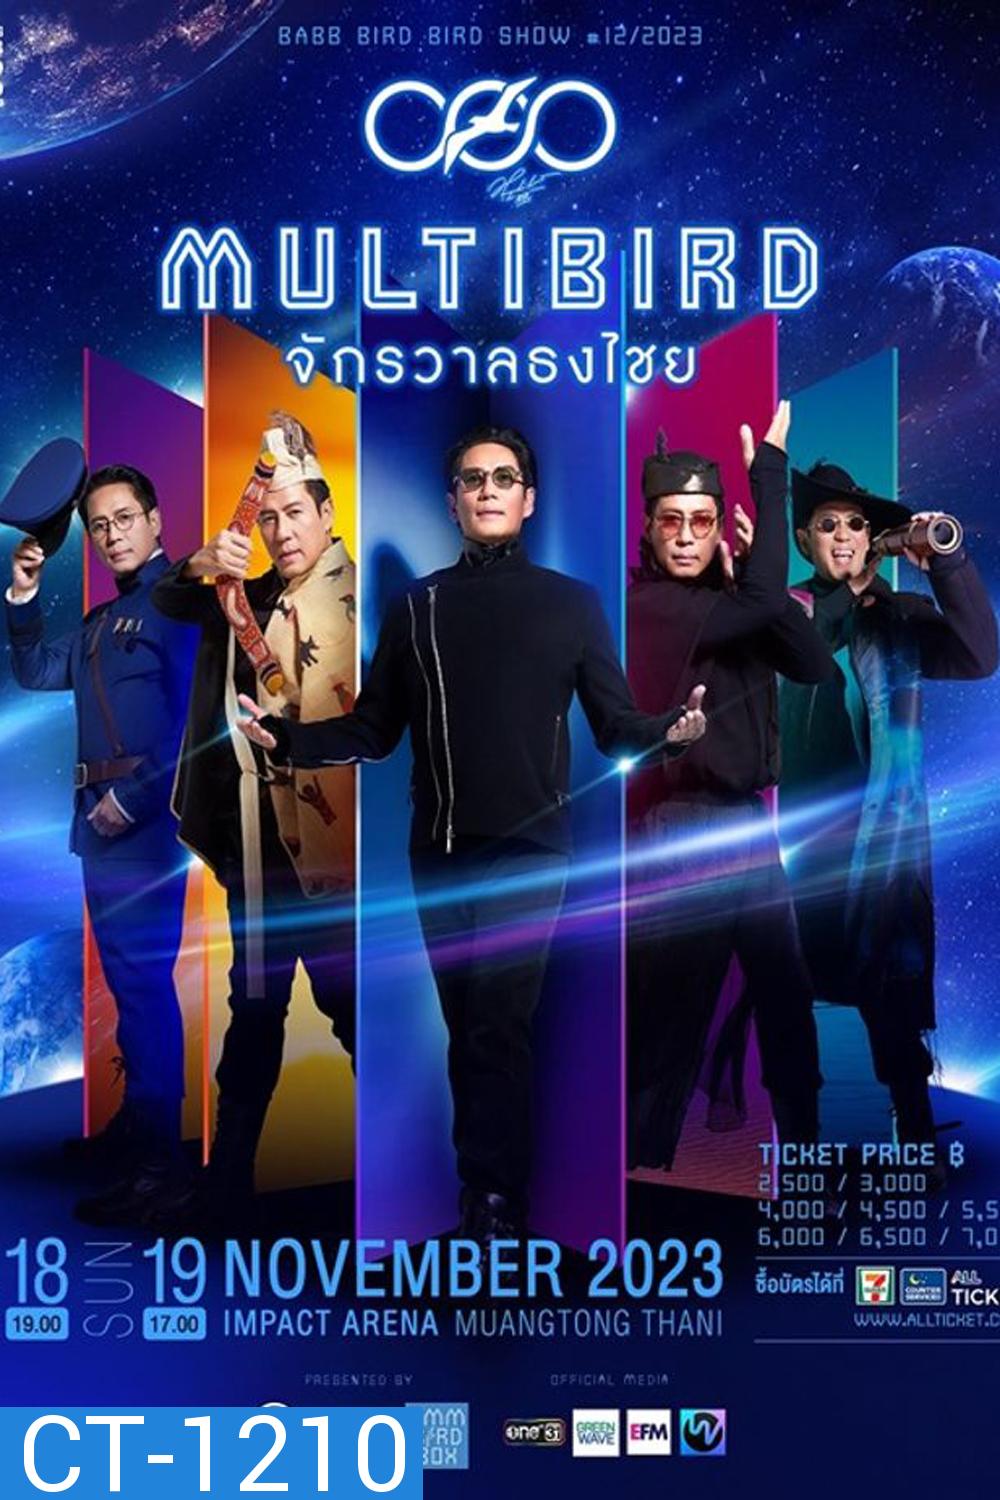 Bird Bird Show 12th MULTIBIRD Thongchai Universe แบบเบิร์ดเบิร์ดโชว์ ครั้งที่ 12 ตอน MULTIBIRD จักรวาลธงไชย (2023)